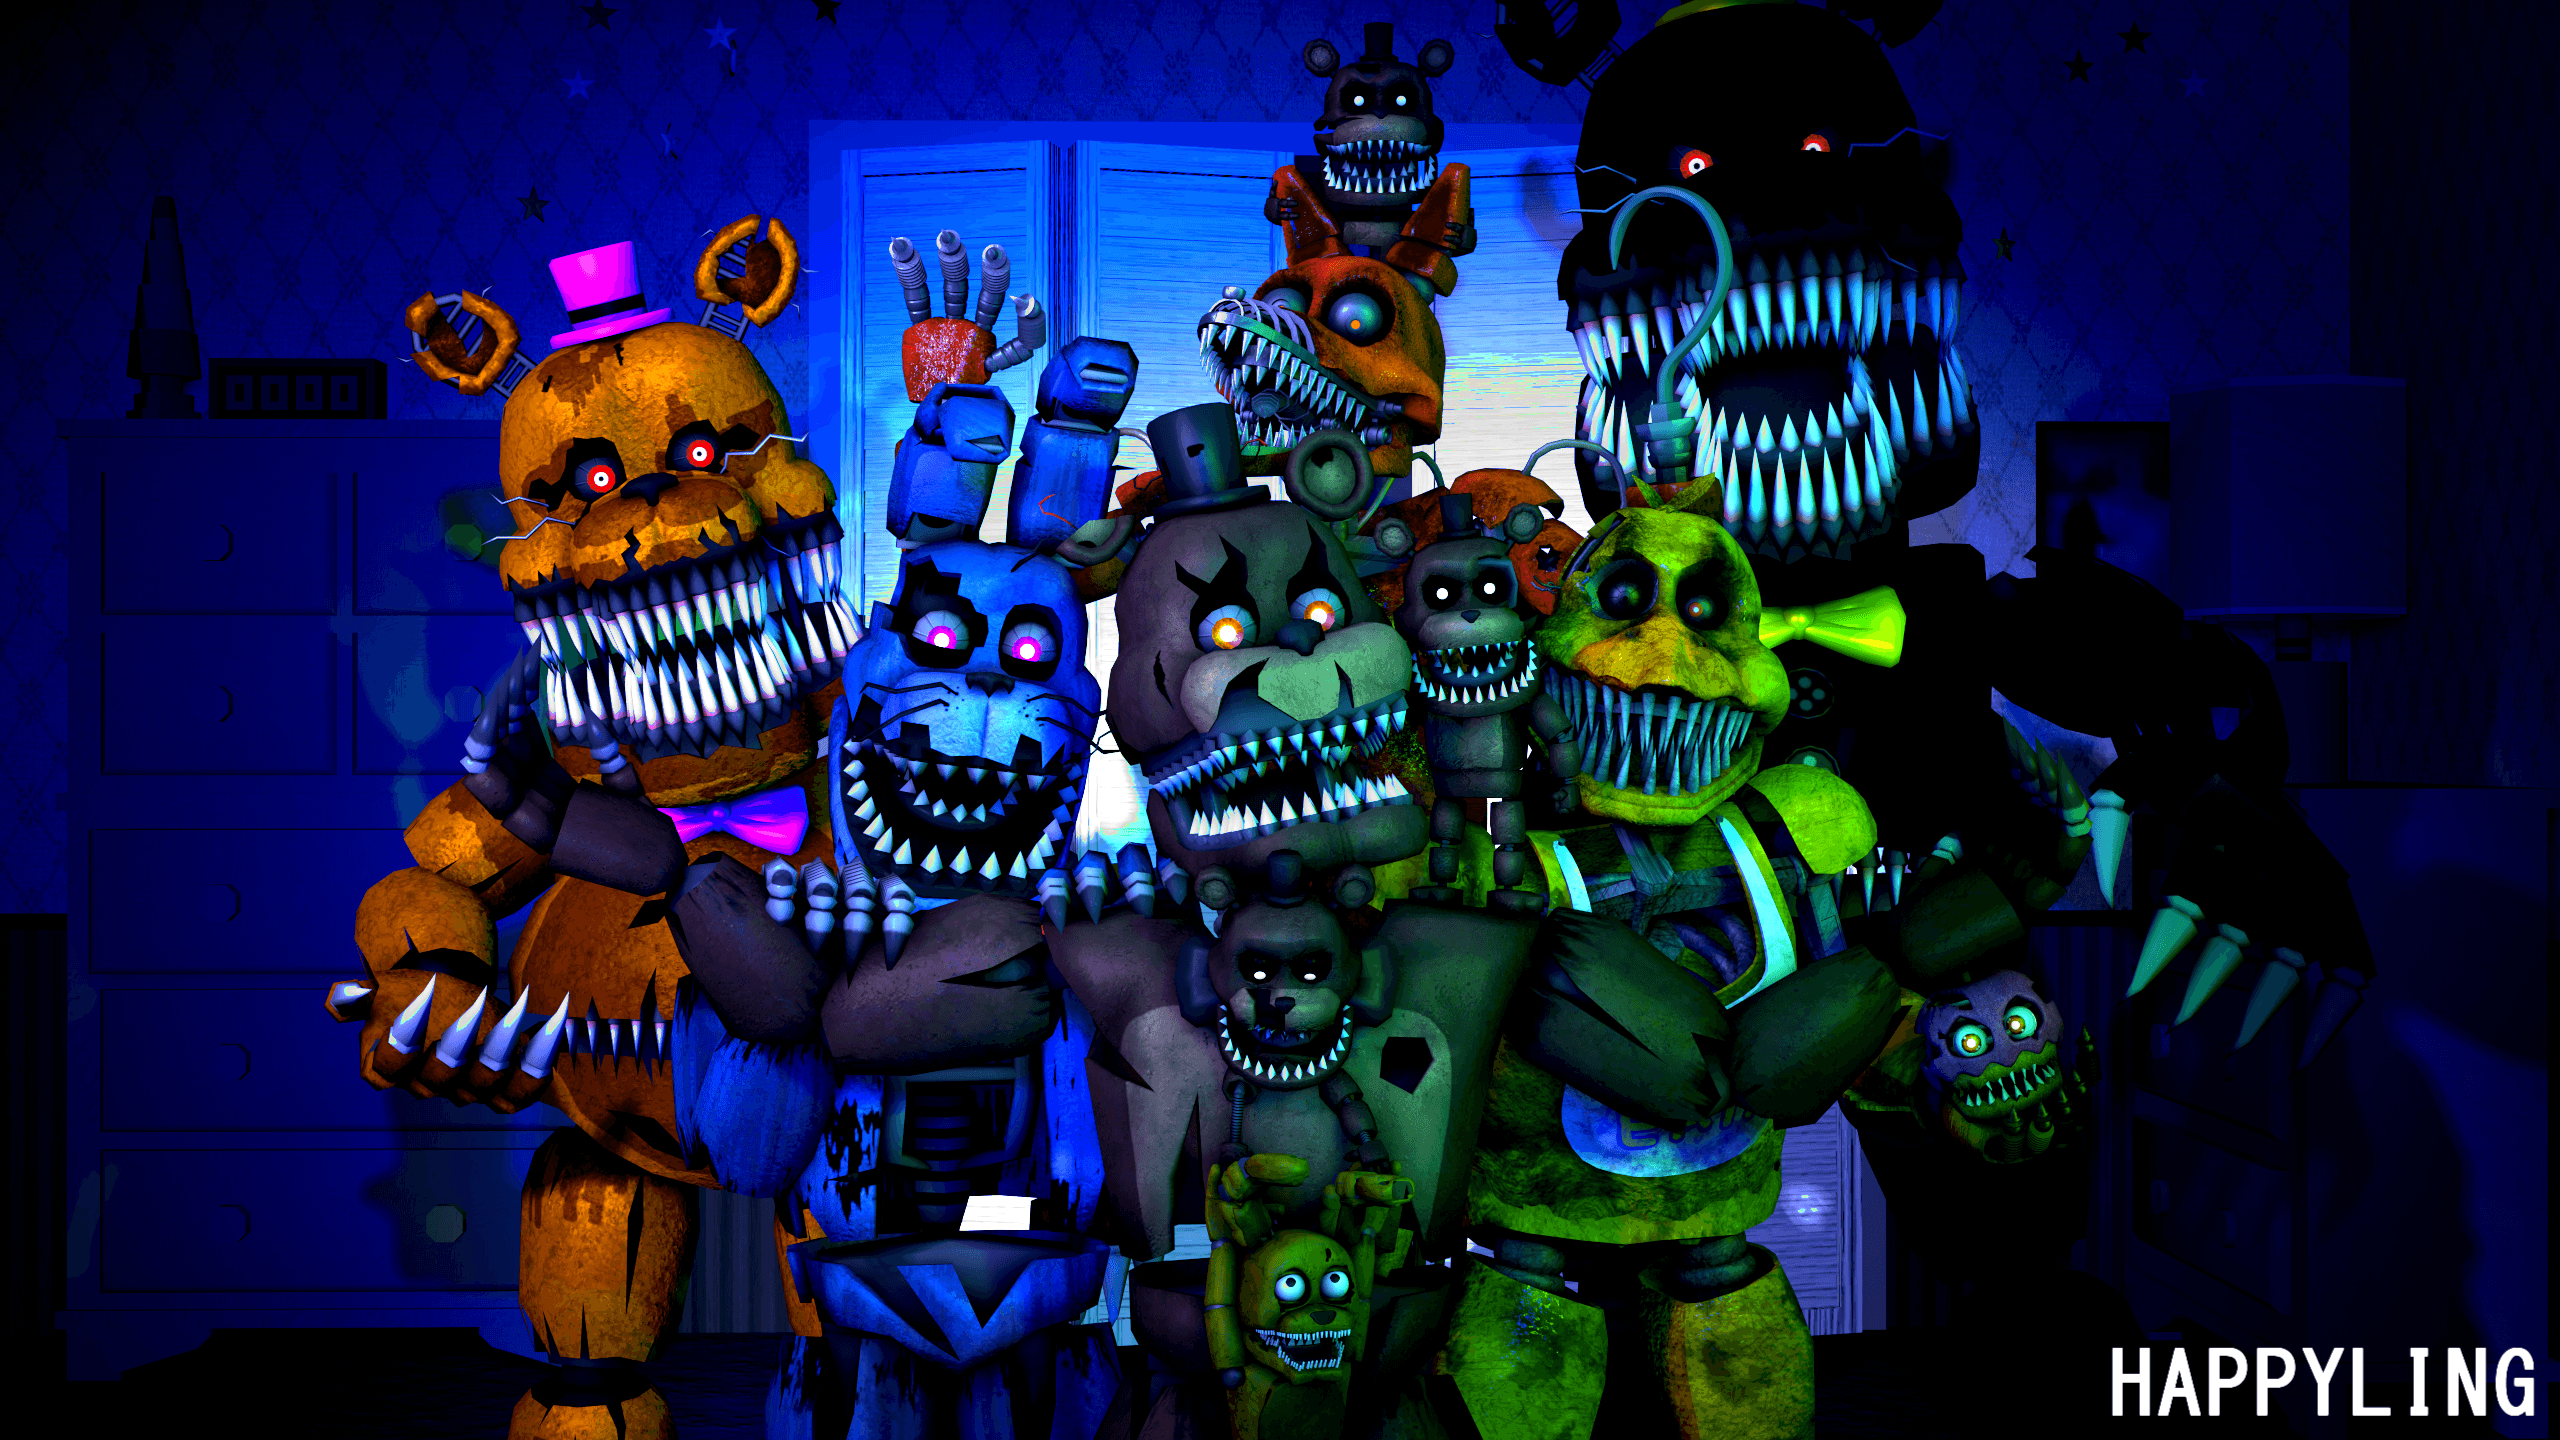 98+] Five Nights At Freddy's Wallpapers - WallpaperSafari